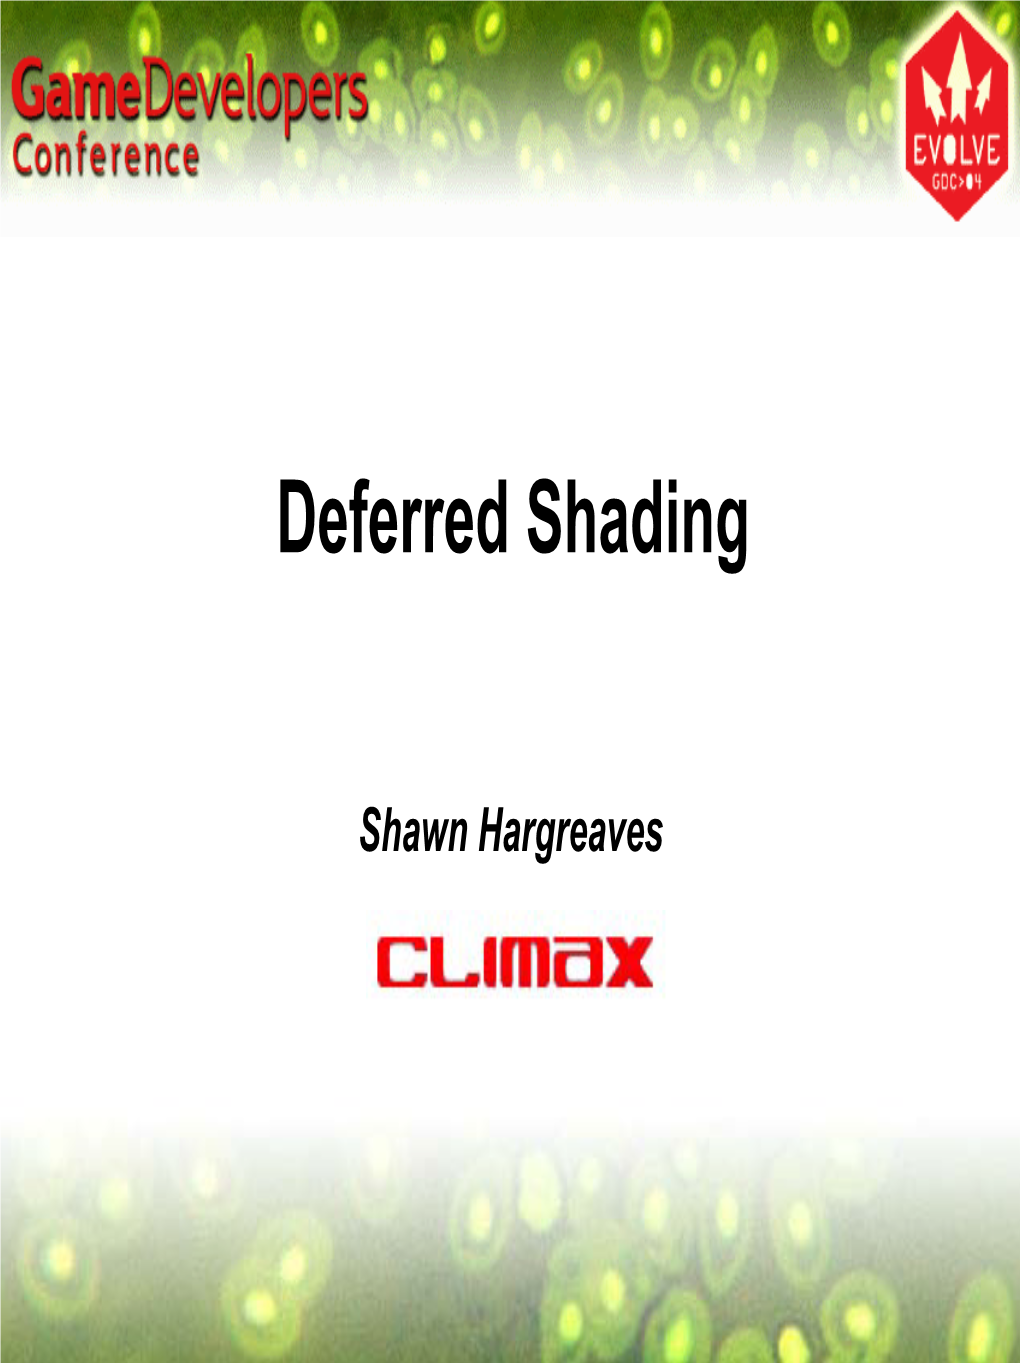 Deferred Shading (GDC 2004)